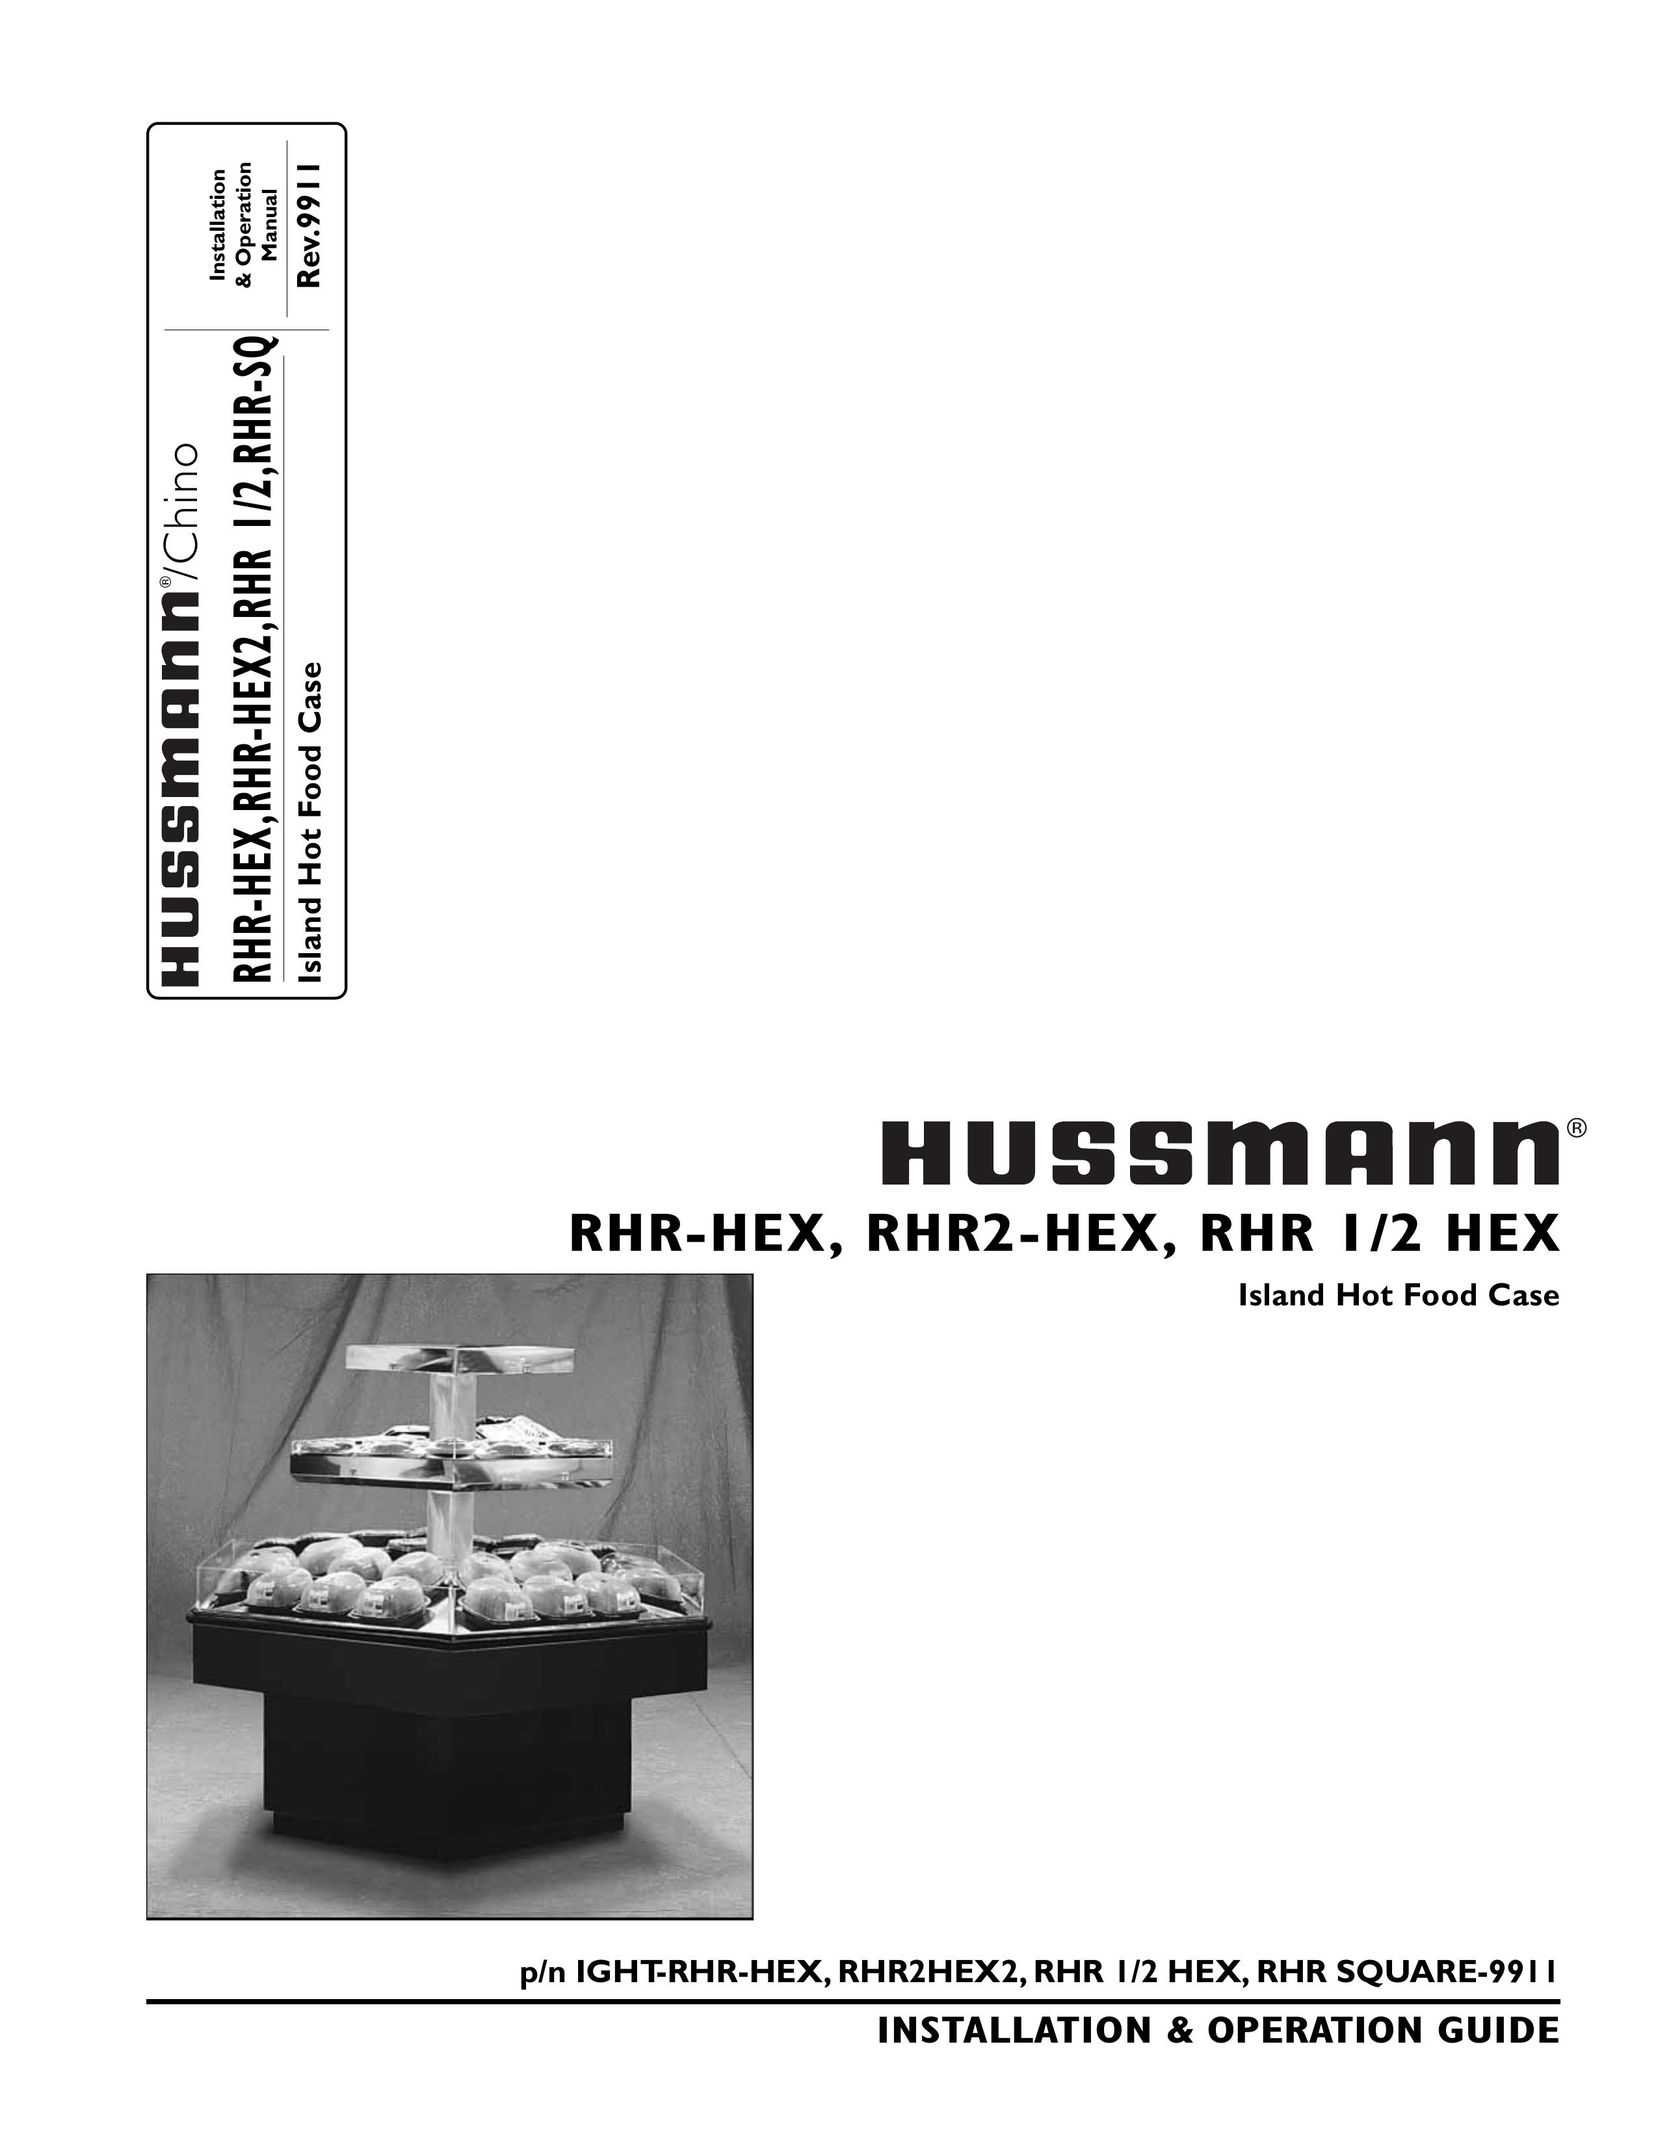 hussman rhr-hex Water Heater User Manual